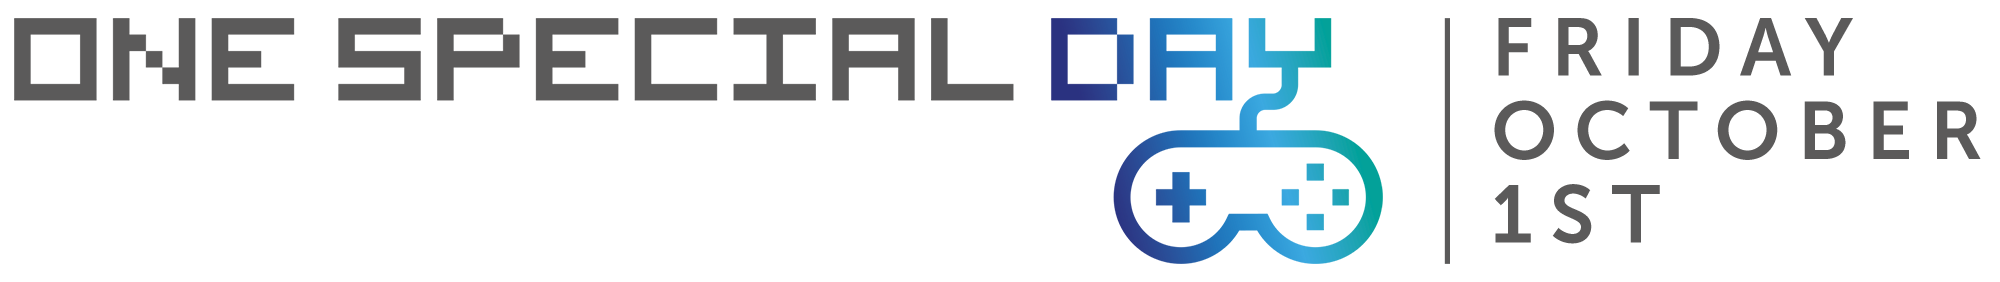 One-Spceial-Day-logo-Date-2000x